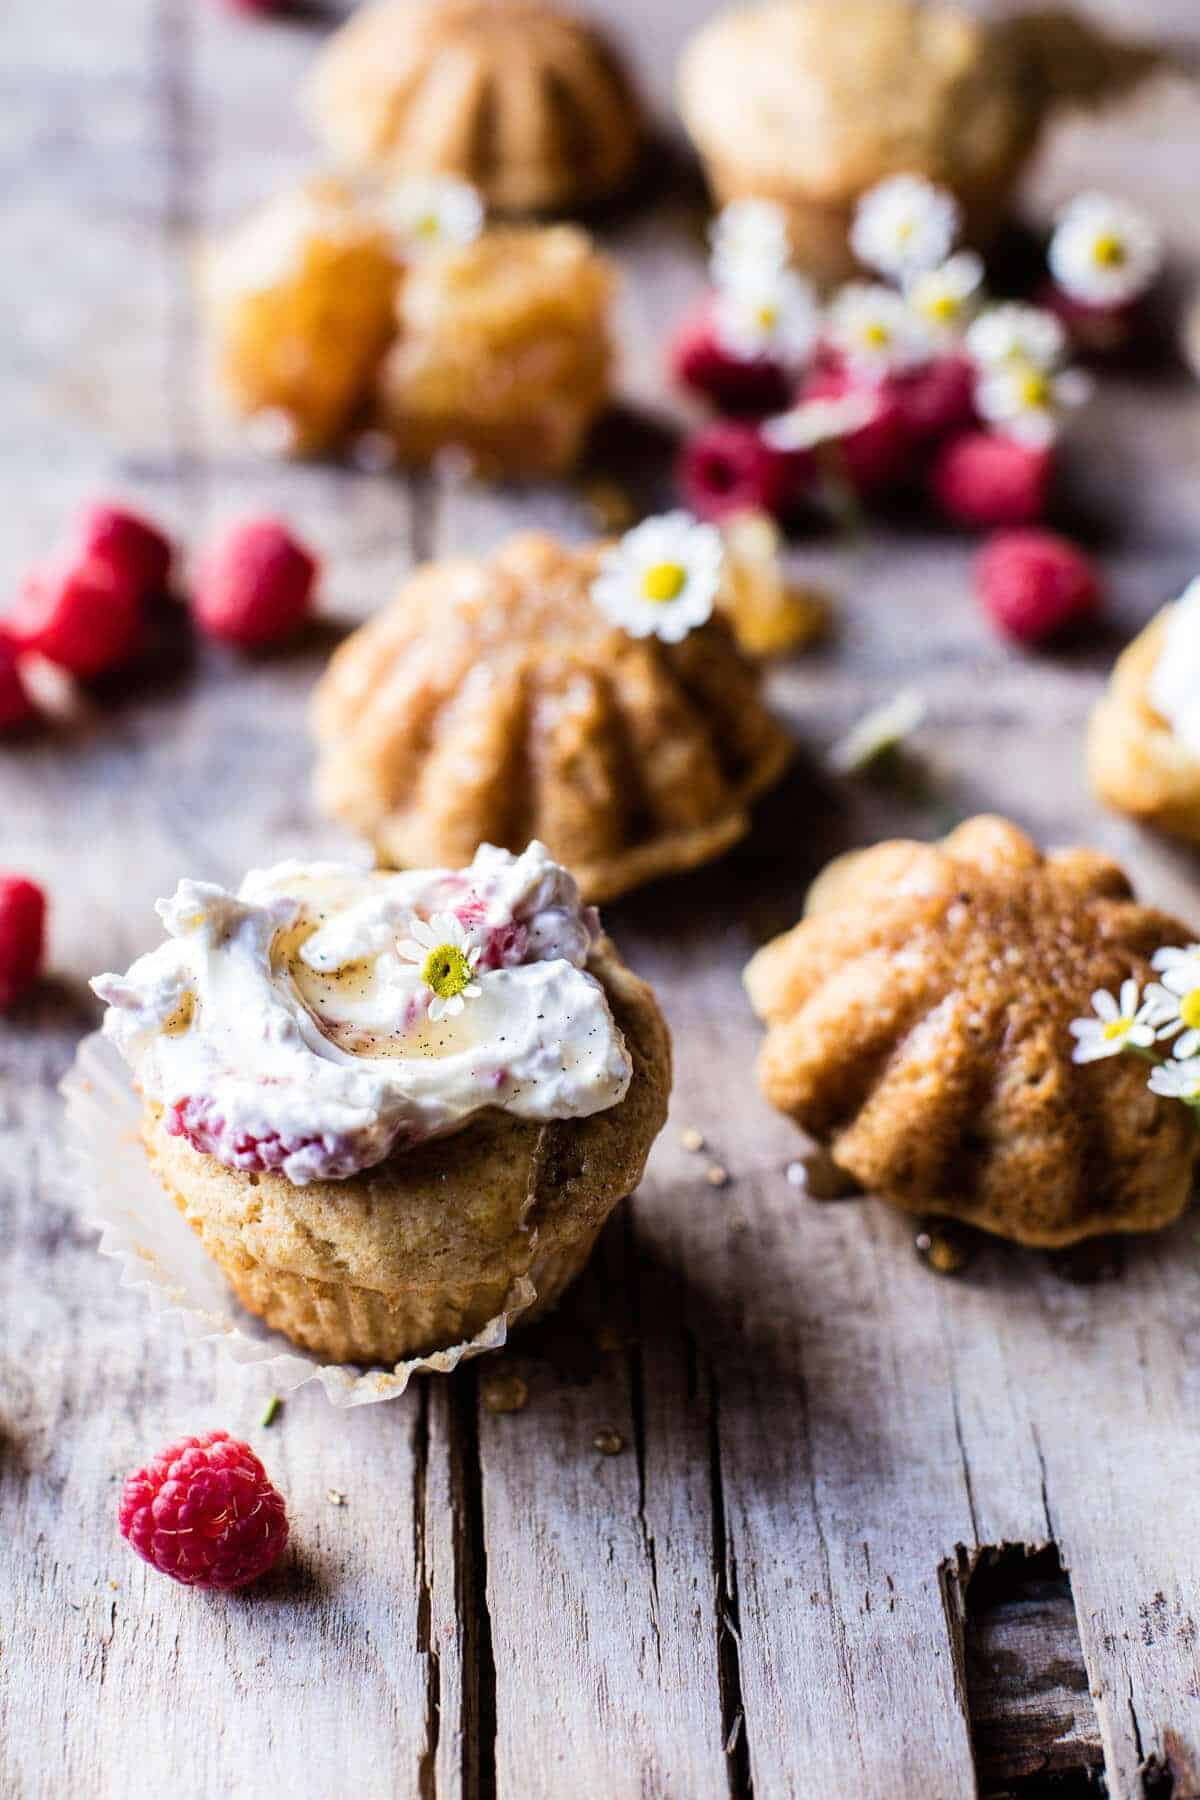 Salted Chamomile Honey Cakes with Raspberry Ripple Cream | halfbakedharvest.com @hbharvest